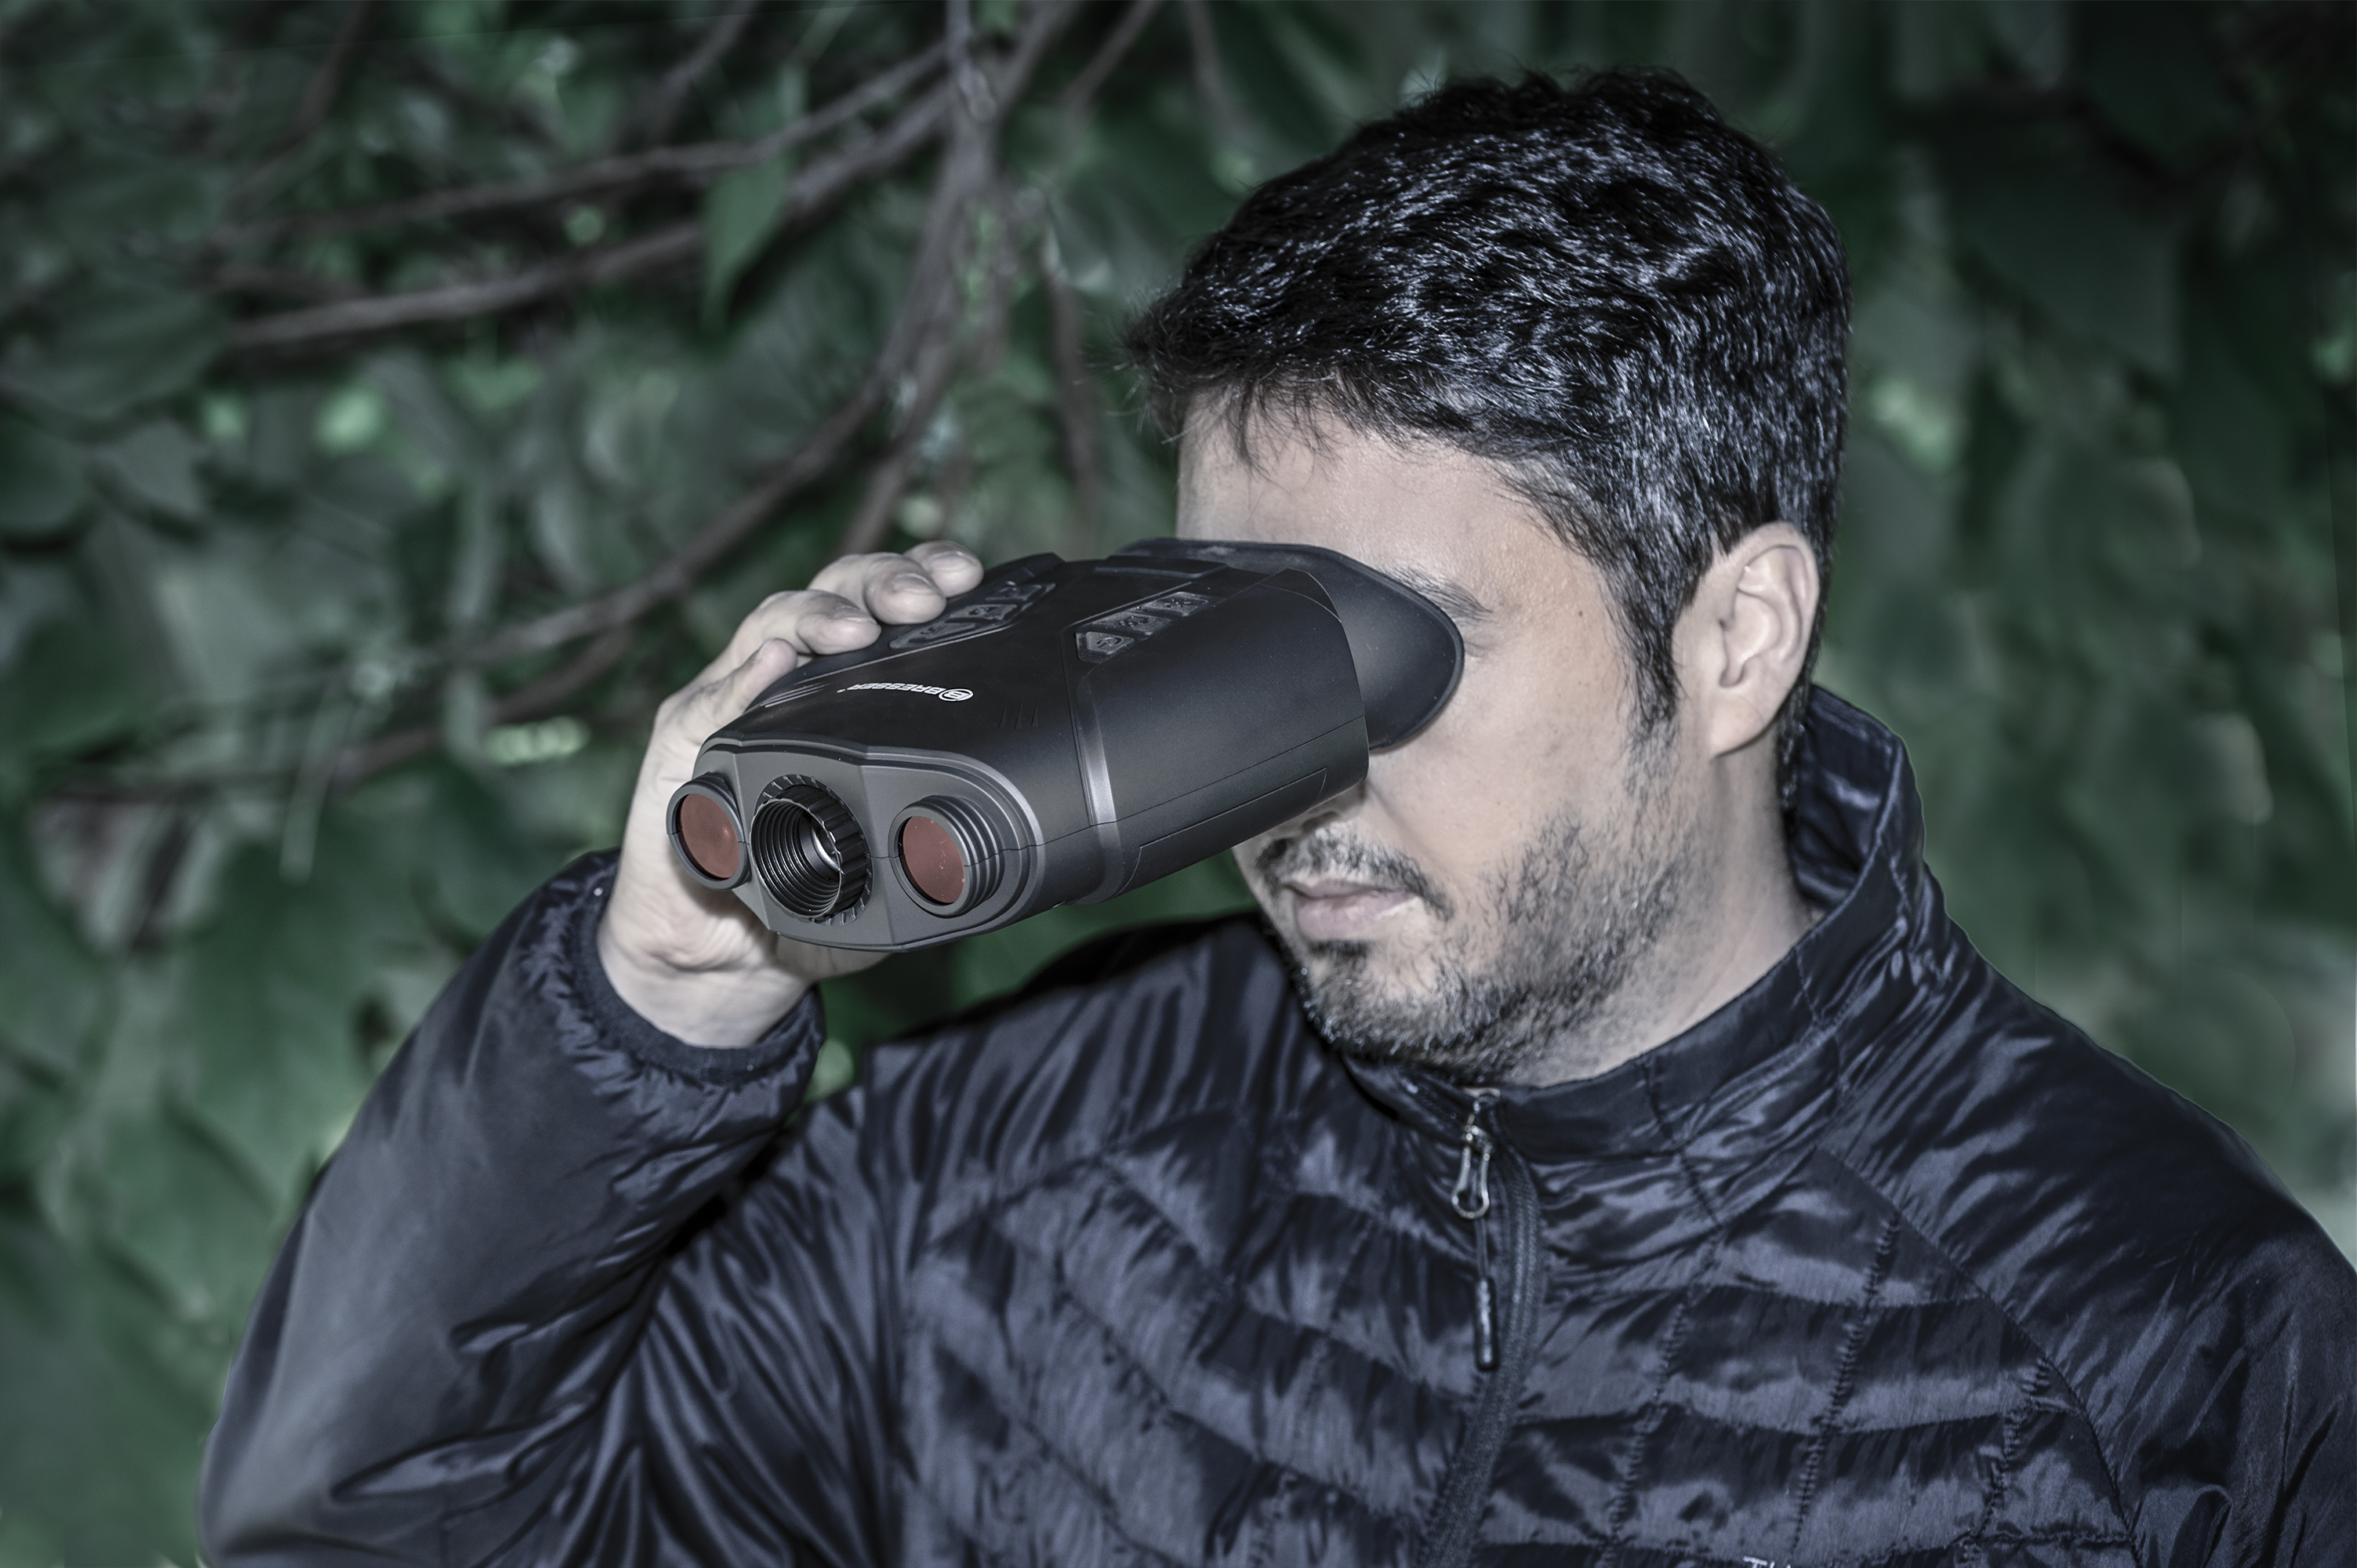 BRESSER Digital Night Vision Binoculars 3x Nightlux 200 Pro